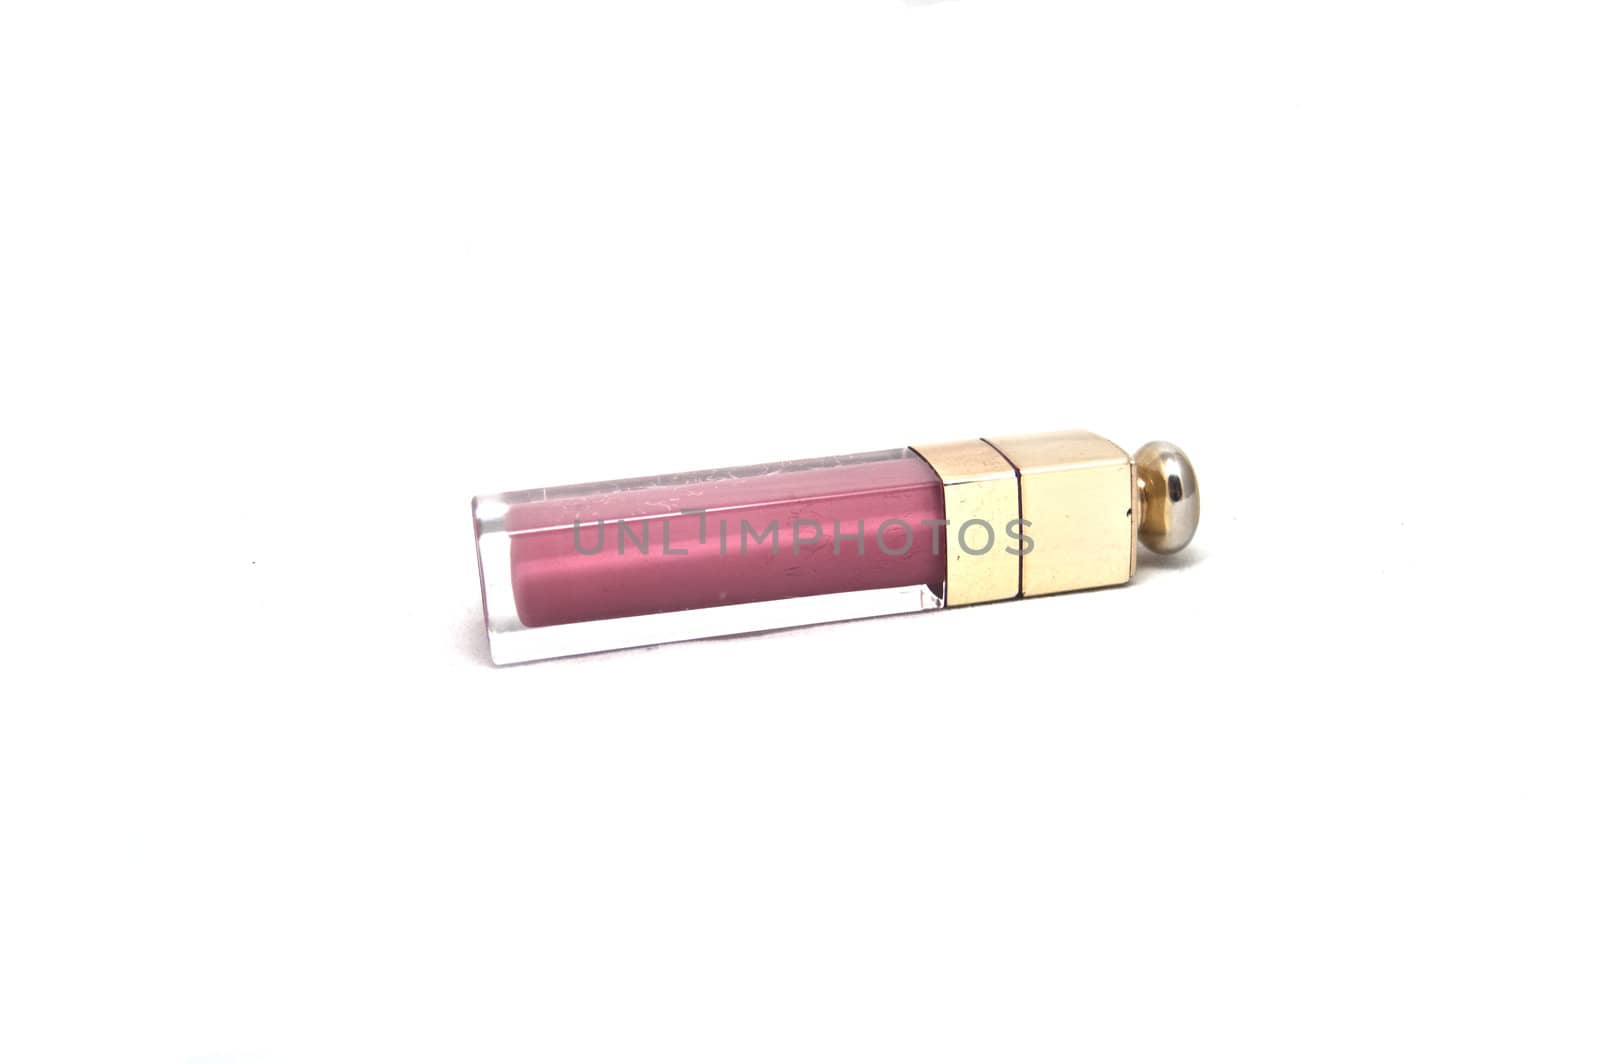 Pink lipstick on white